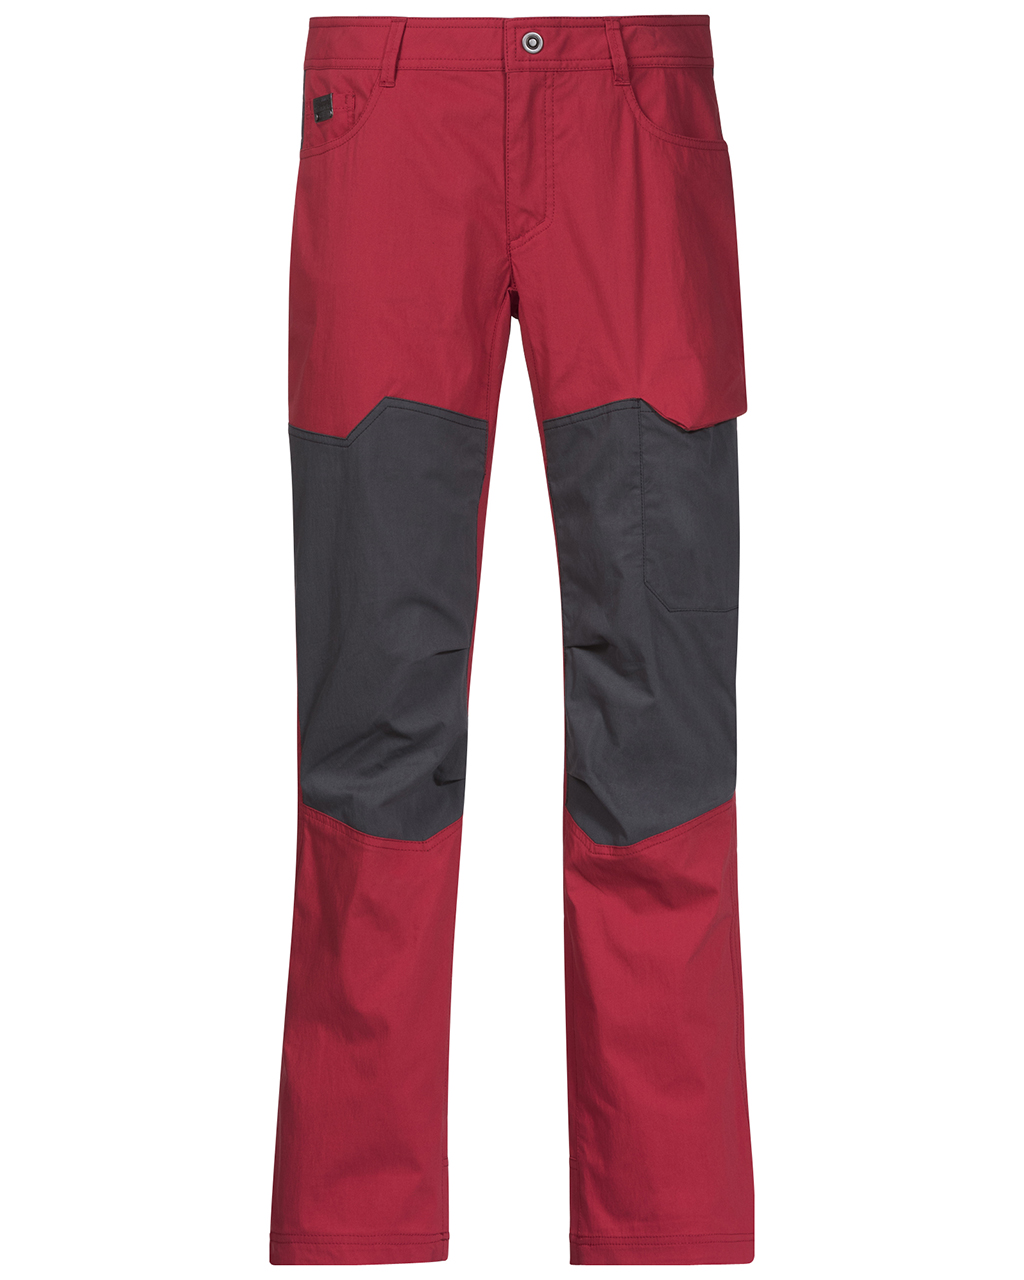 Bergans Fongen Lady Pant Pale Red/Graphite (Storlek M)